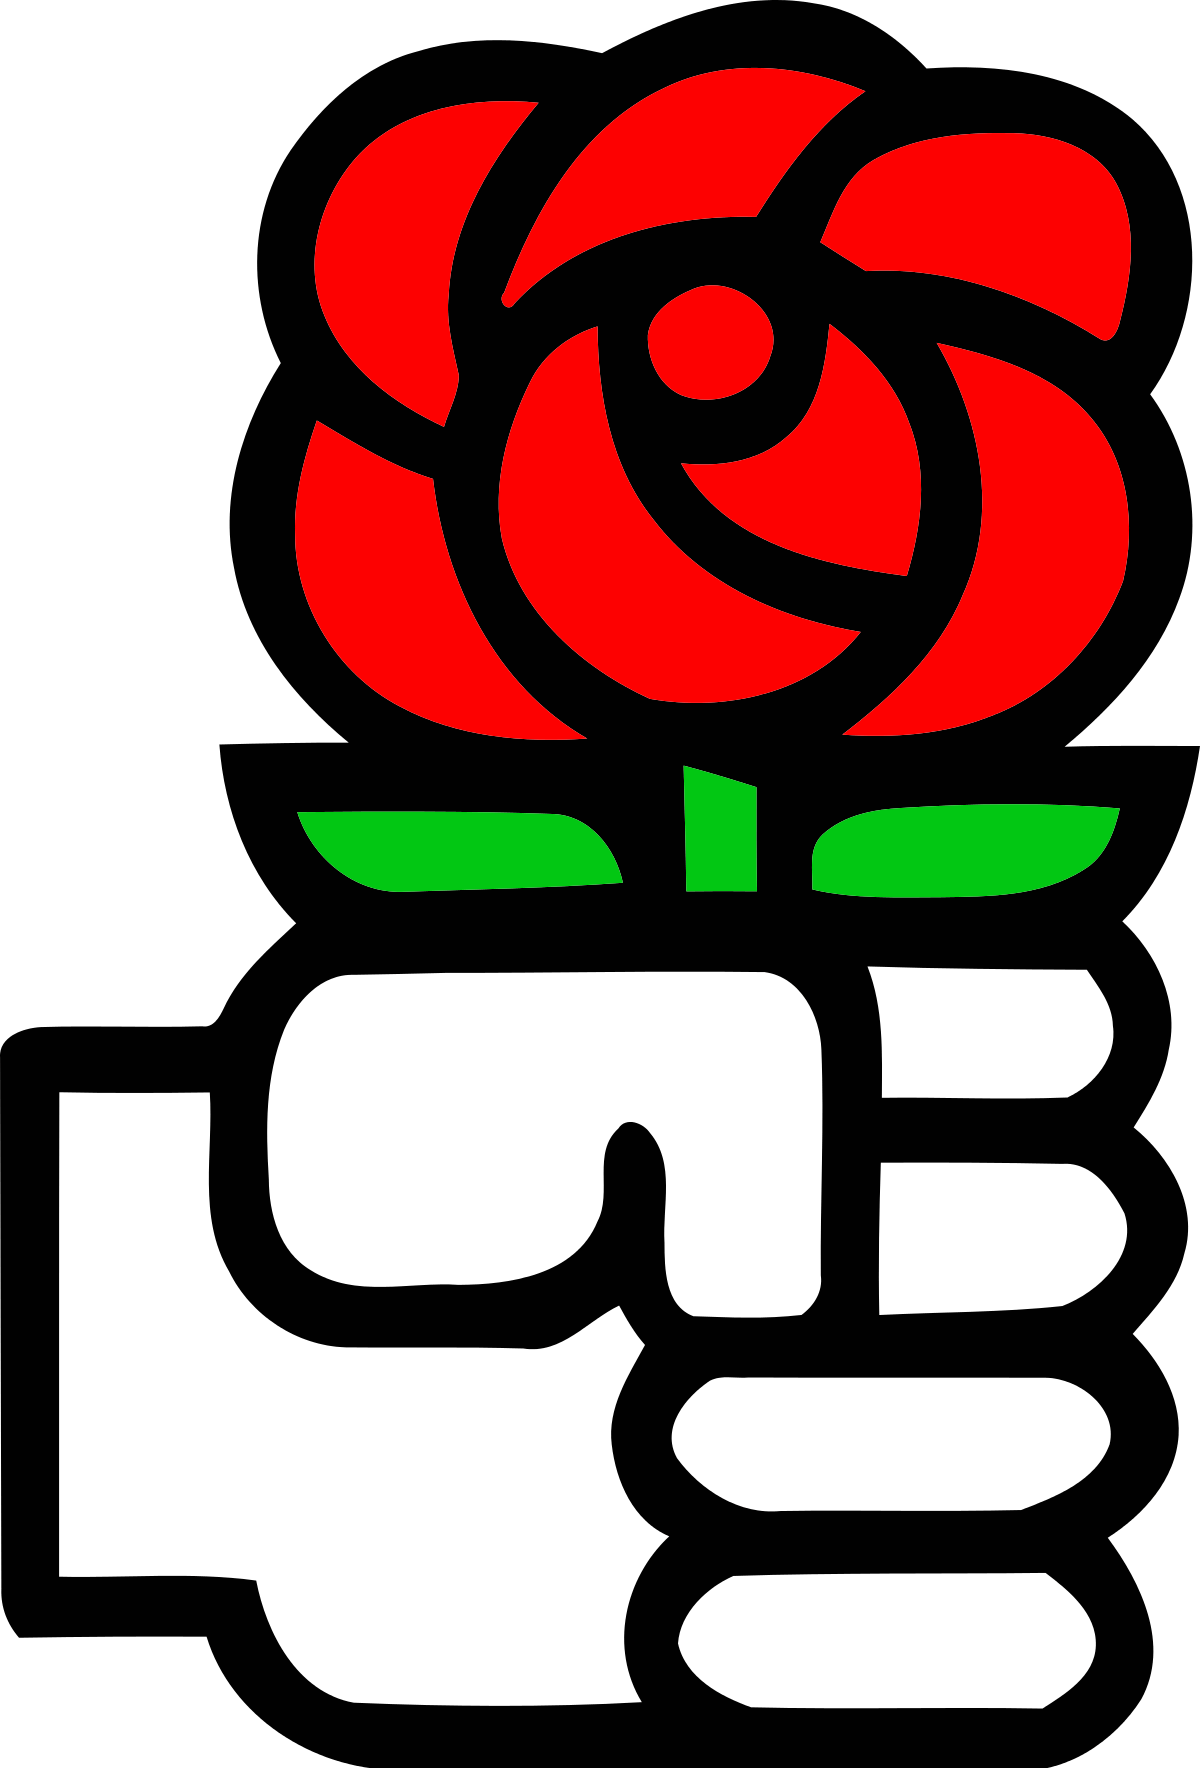 Socialist Logo - Philippine Democratic Socialist Party